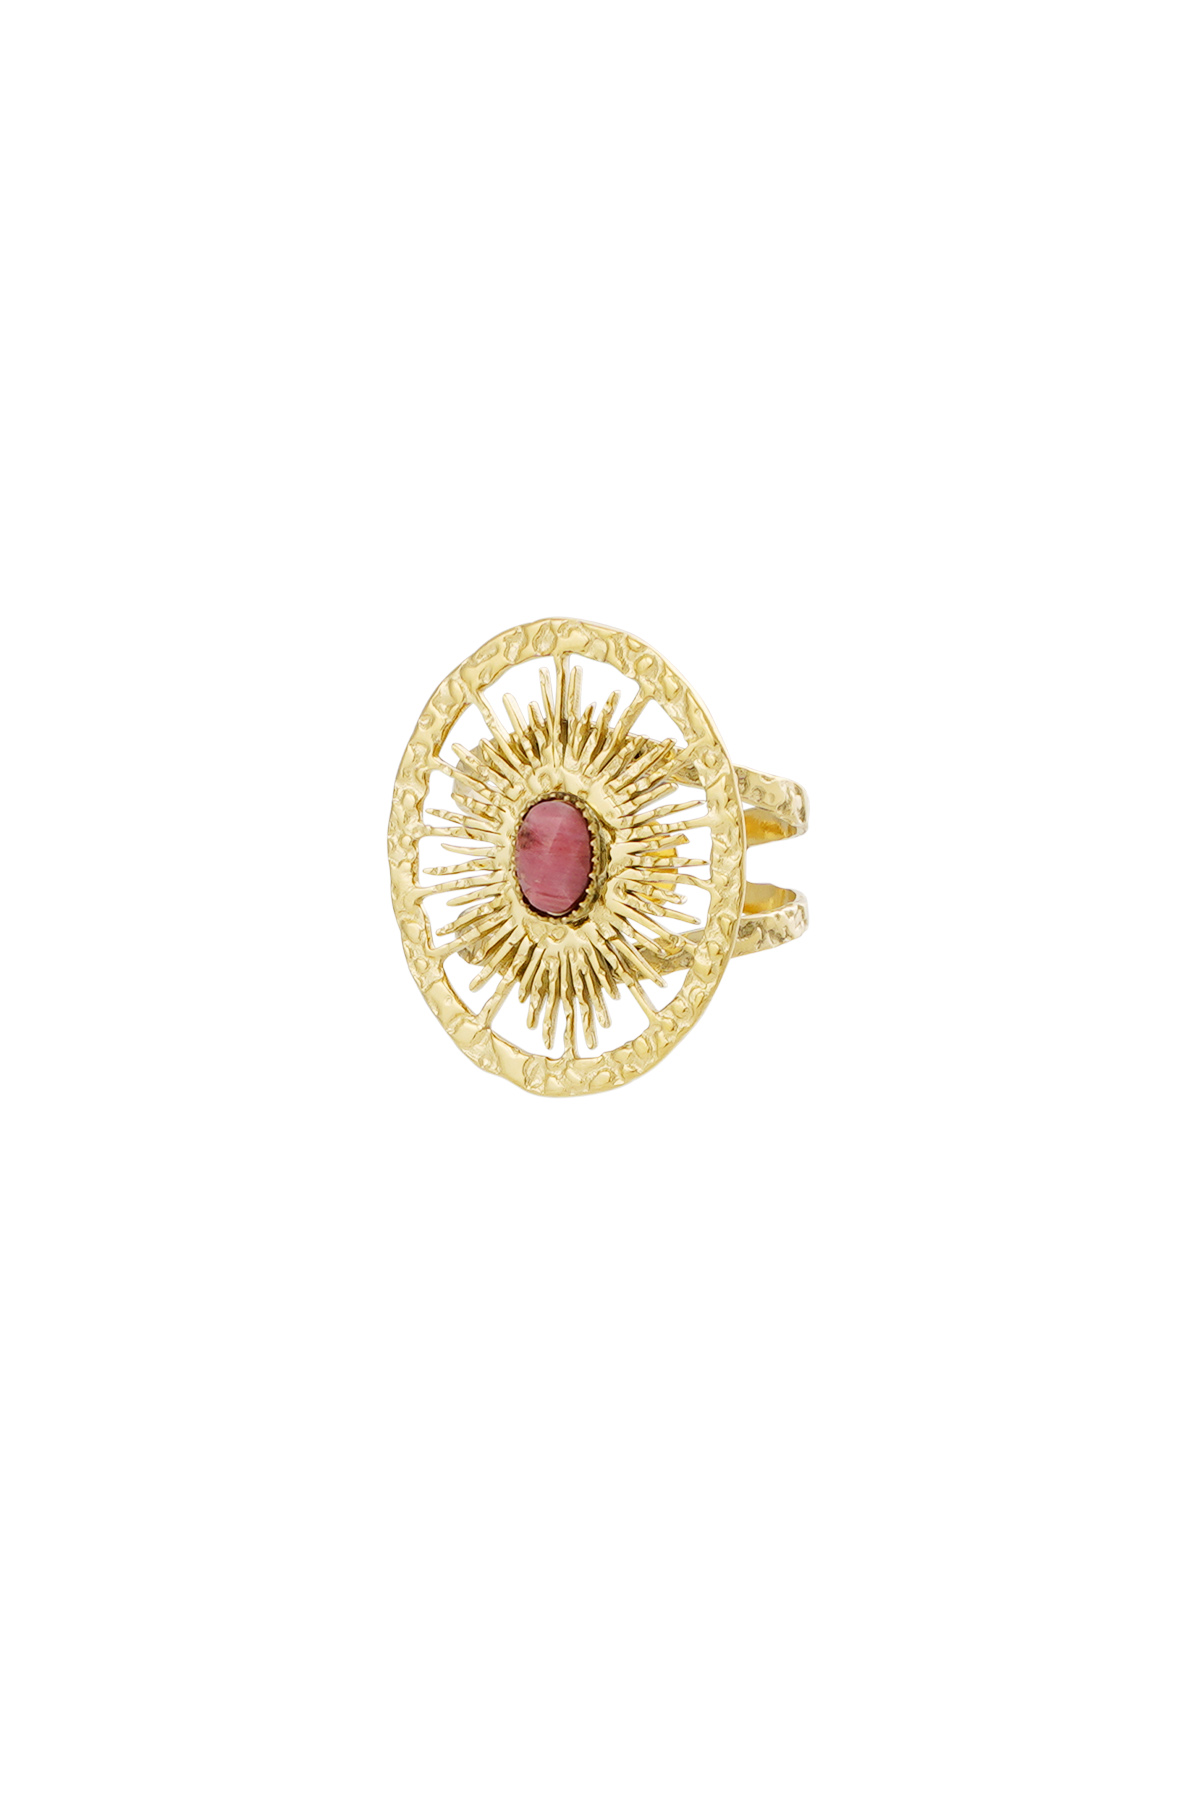 Ring ronde twister met steen - goud/roze